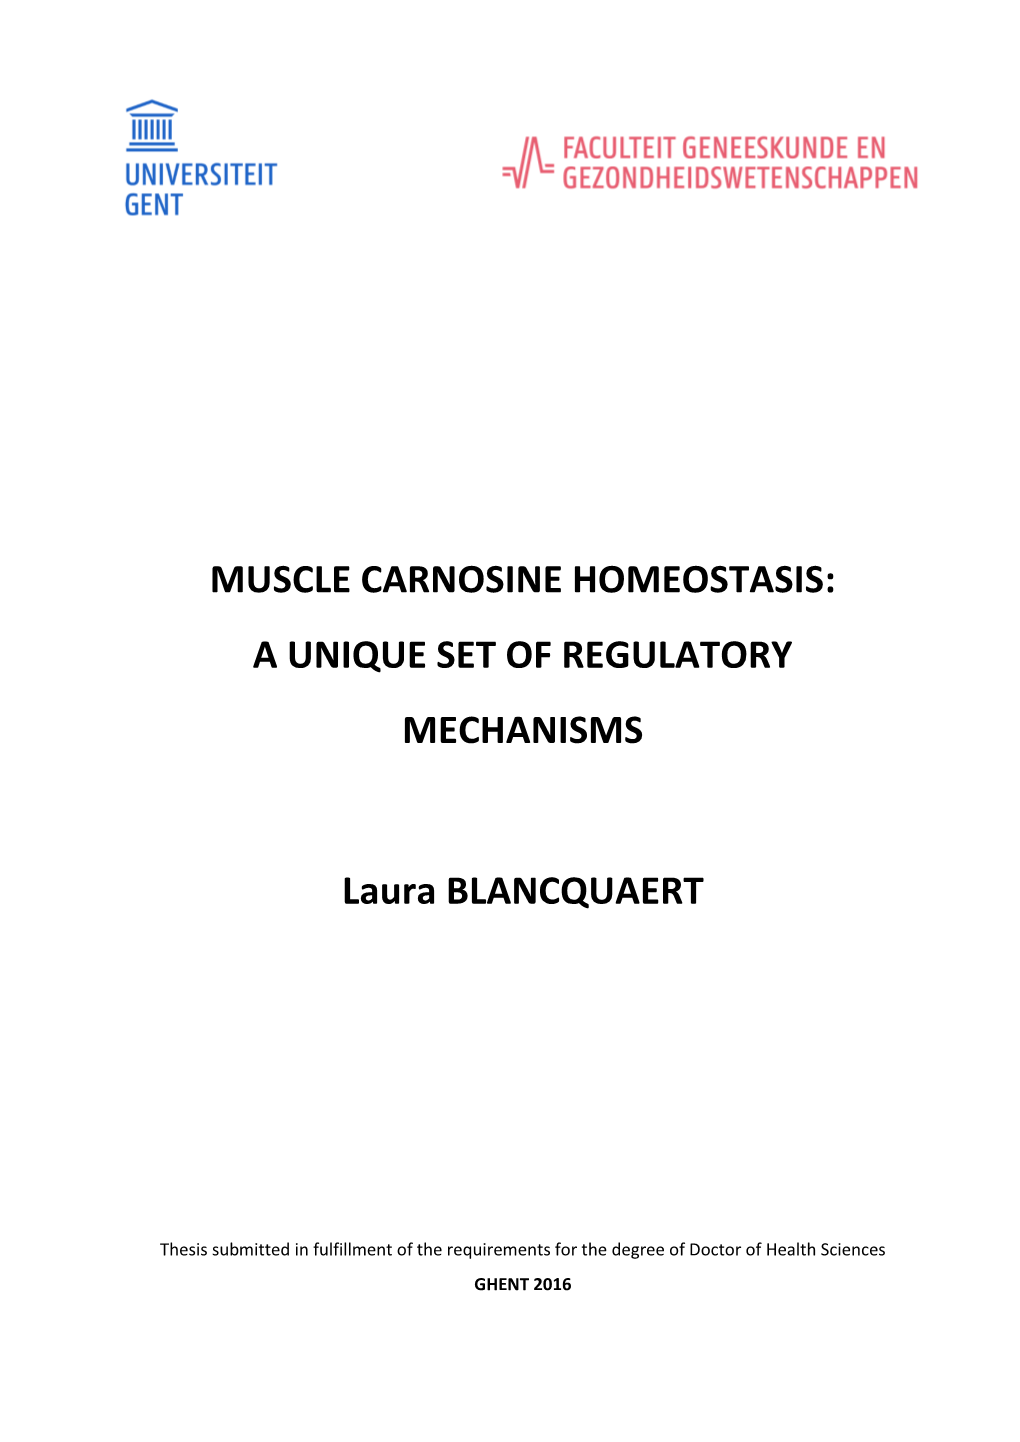 Muscle Carnosine Homeostasis: a Unique Set of Regulatory Mechanisms